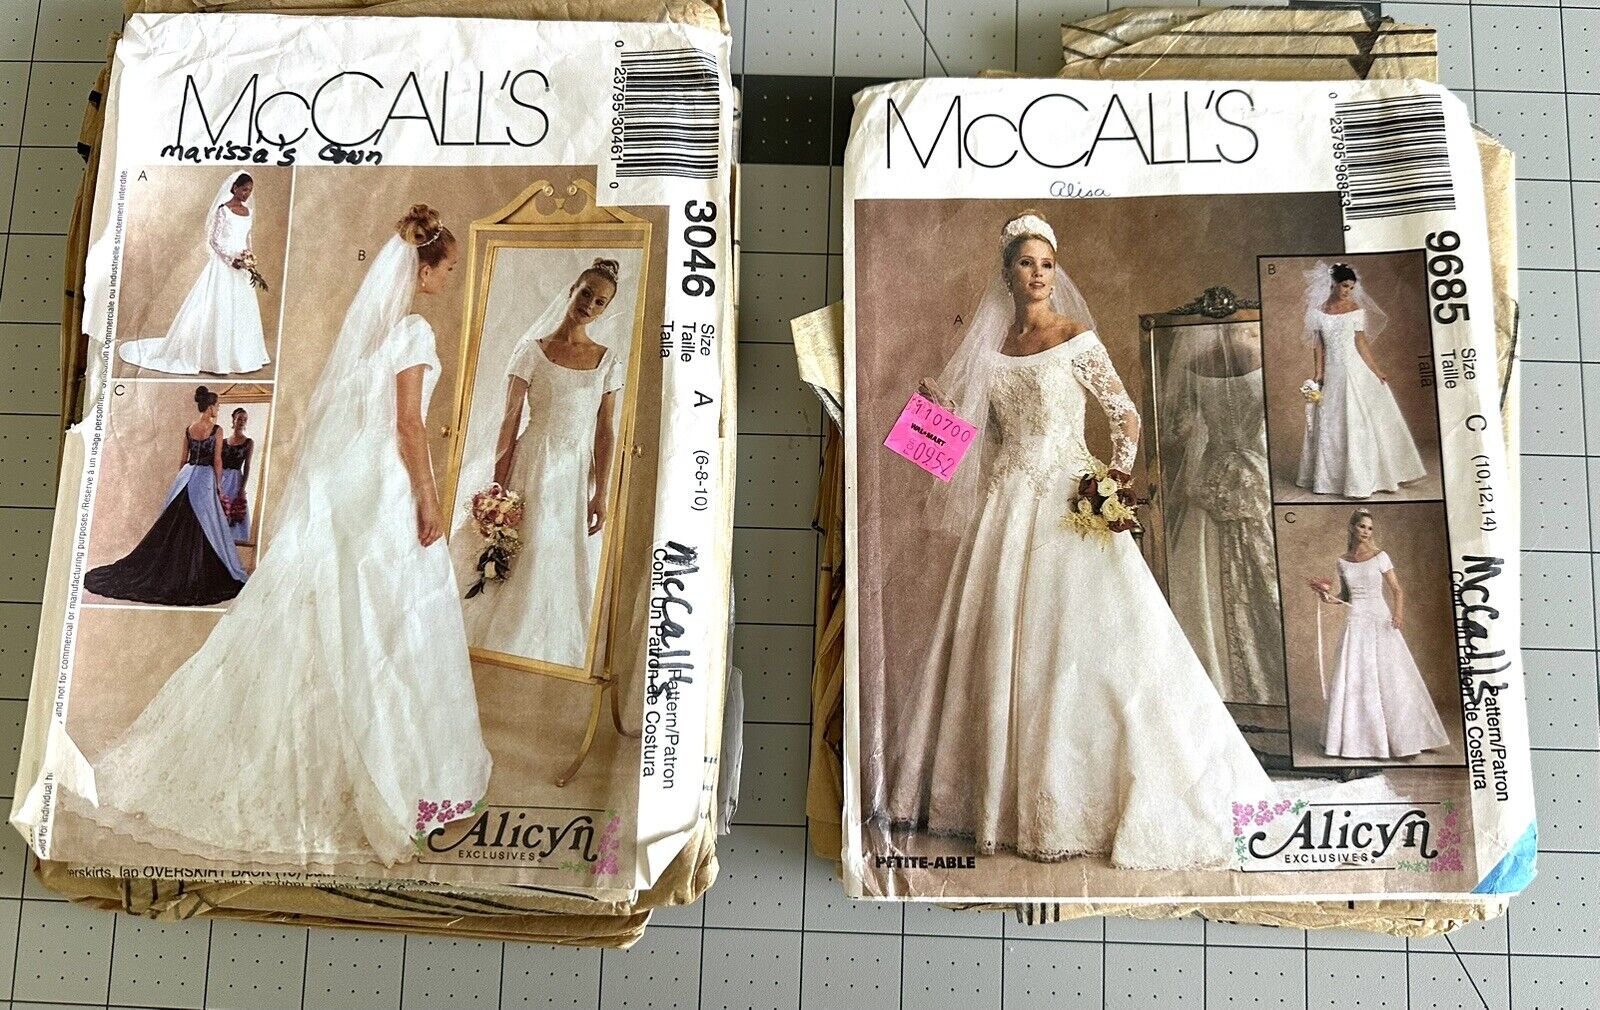 MCCALL'S Set/2 Wedding Dress Patterns 3046 (A 6,8,10), 9685 (C 10,12,14) Alicyn